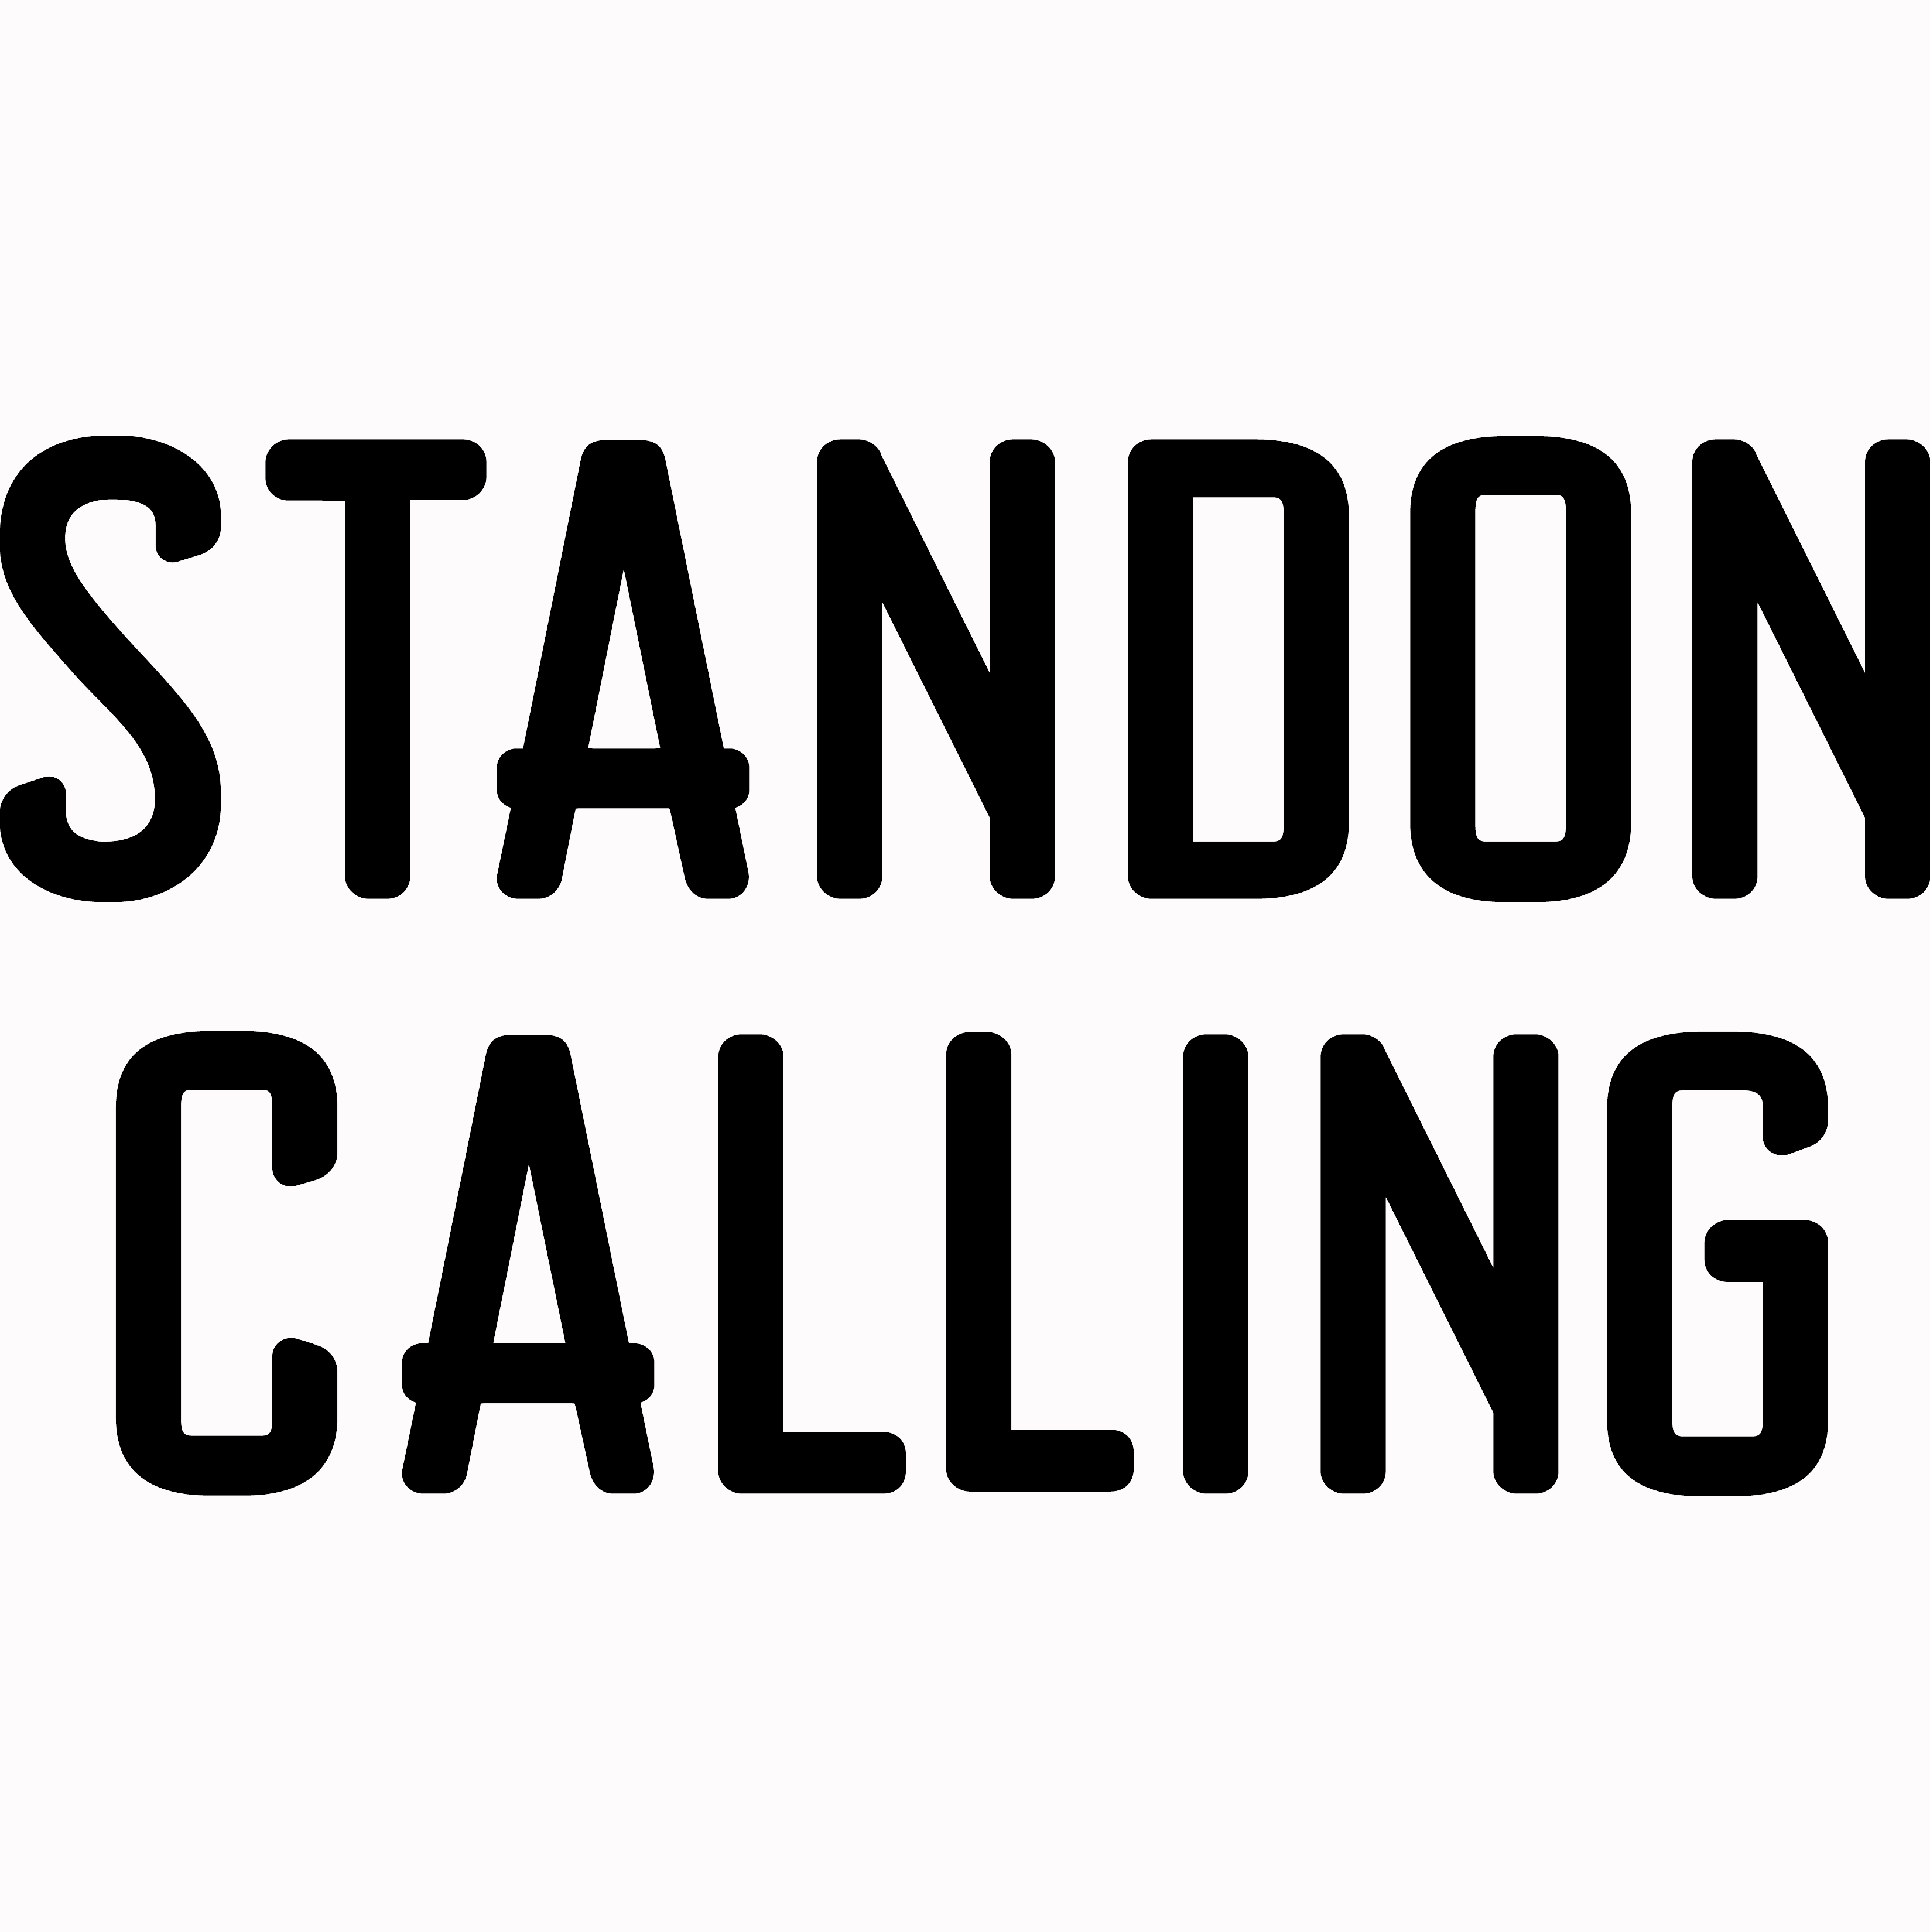 Standon Calling Logo